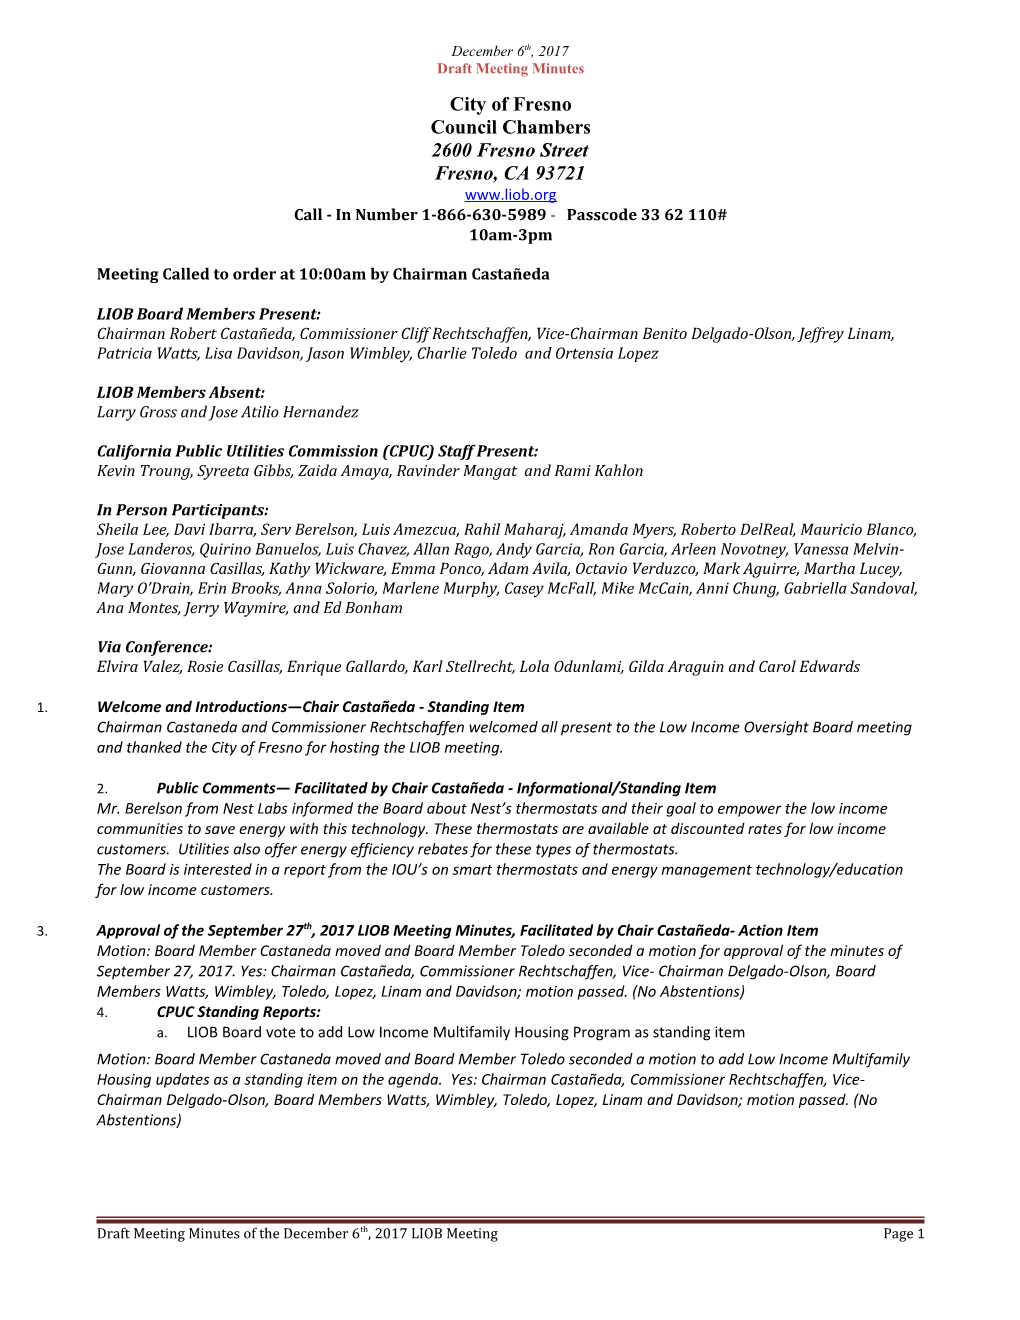 Draft Meeting Minutes of the 6-8-17 LIOB Meetingsf